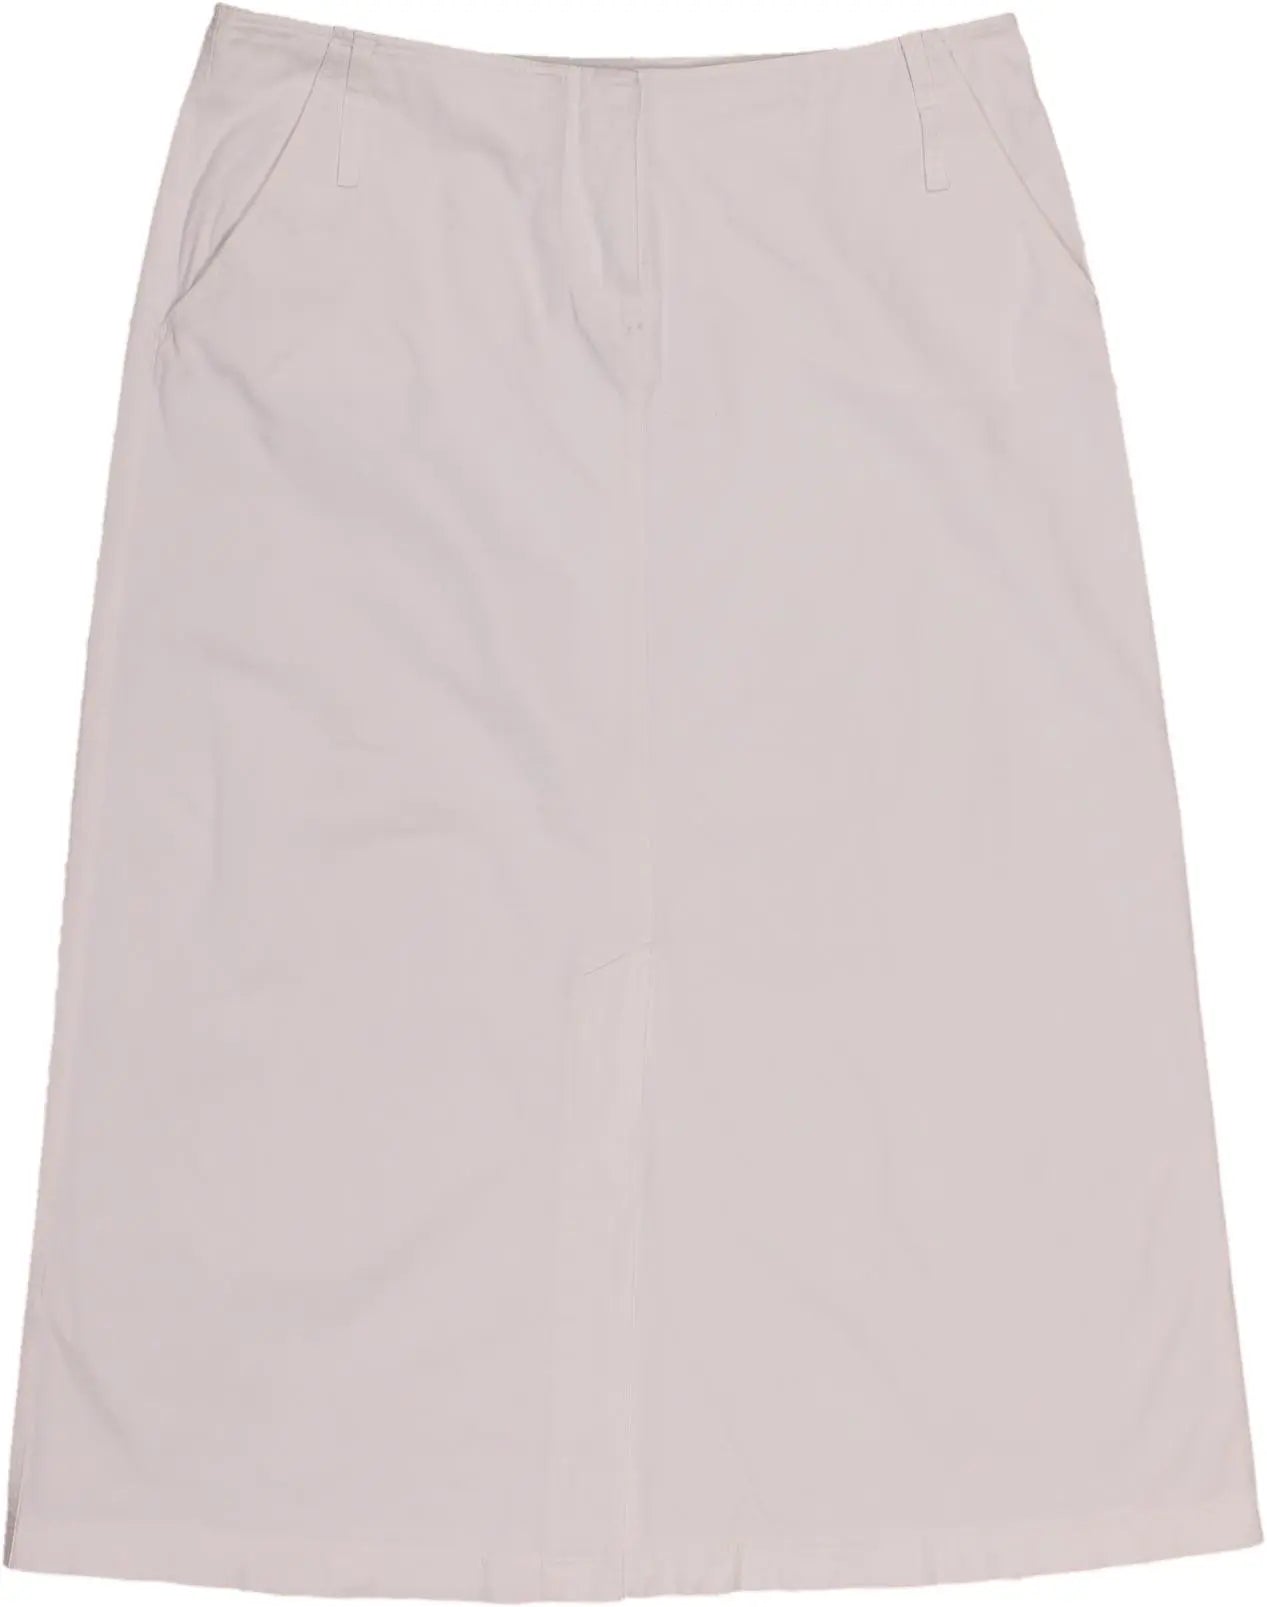 Marc Aurel - Long White Skirt- ThriftTale.com - Vintage and second handclothing